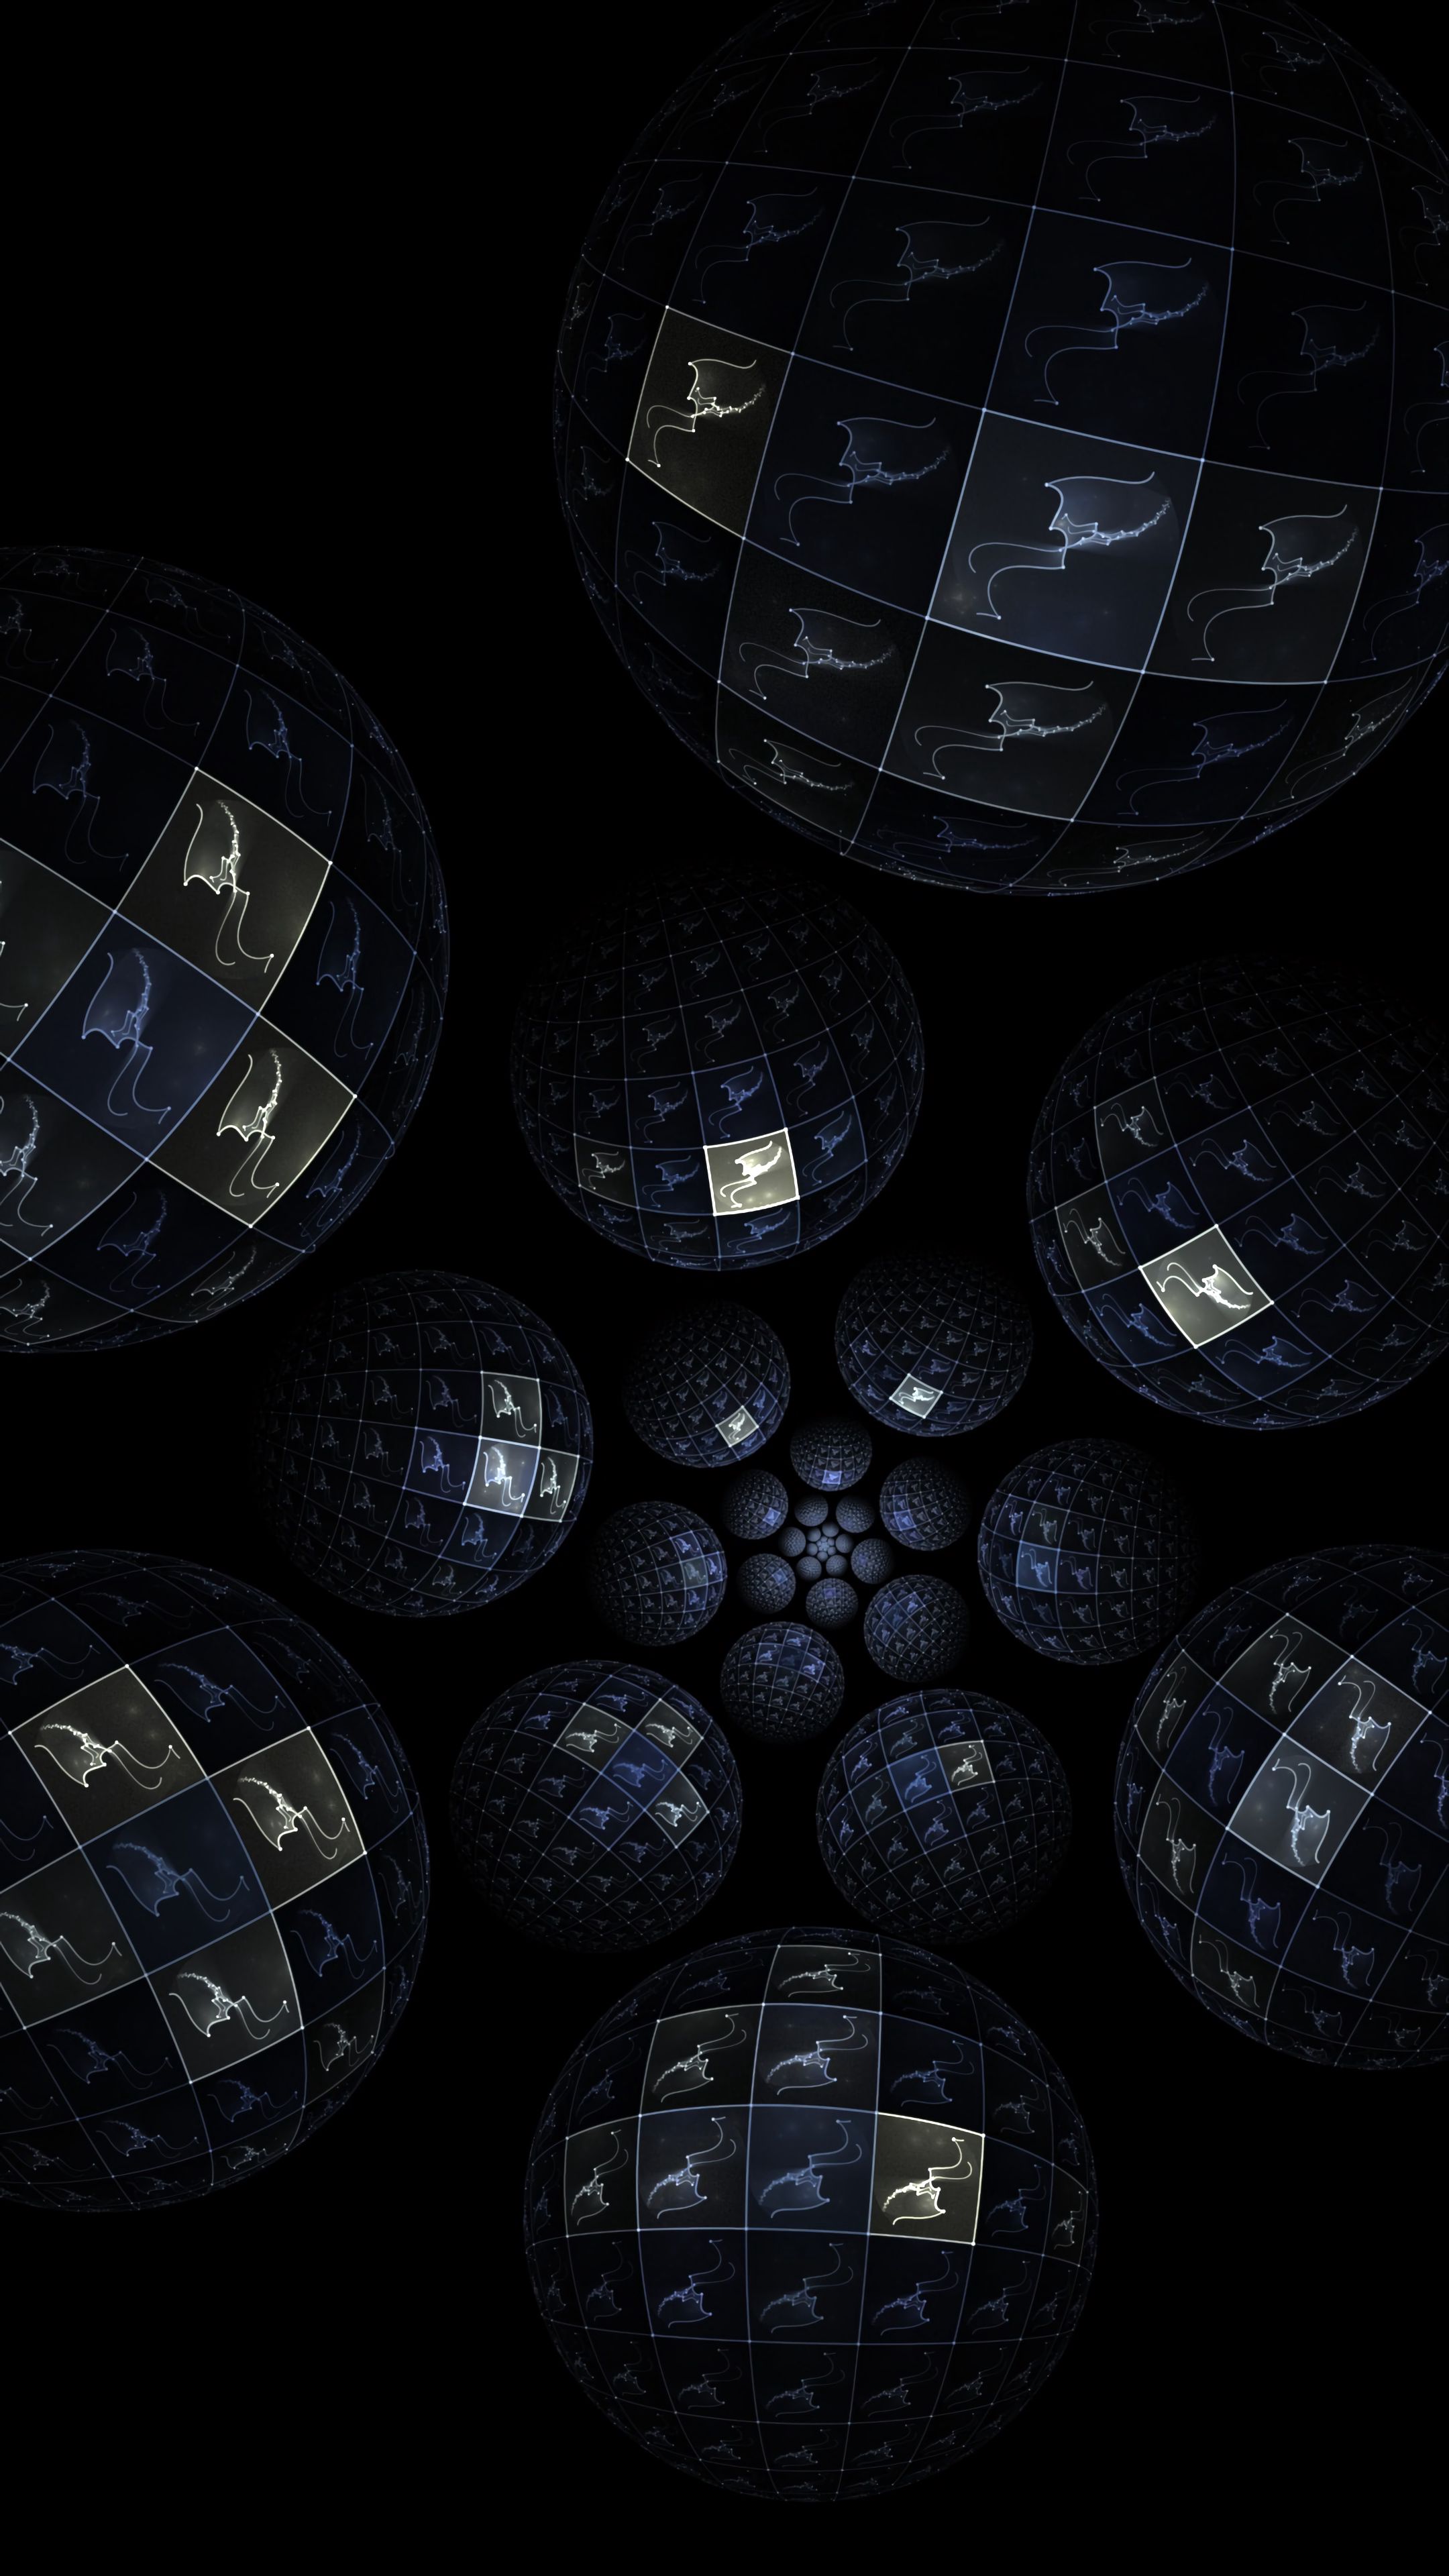 Widescreen image immersion, patterns, balls, dark